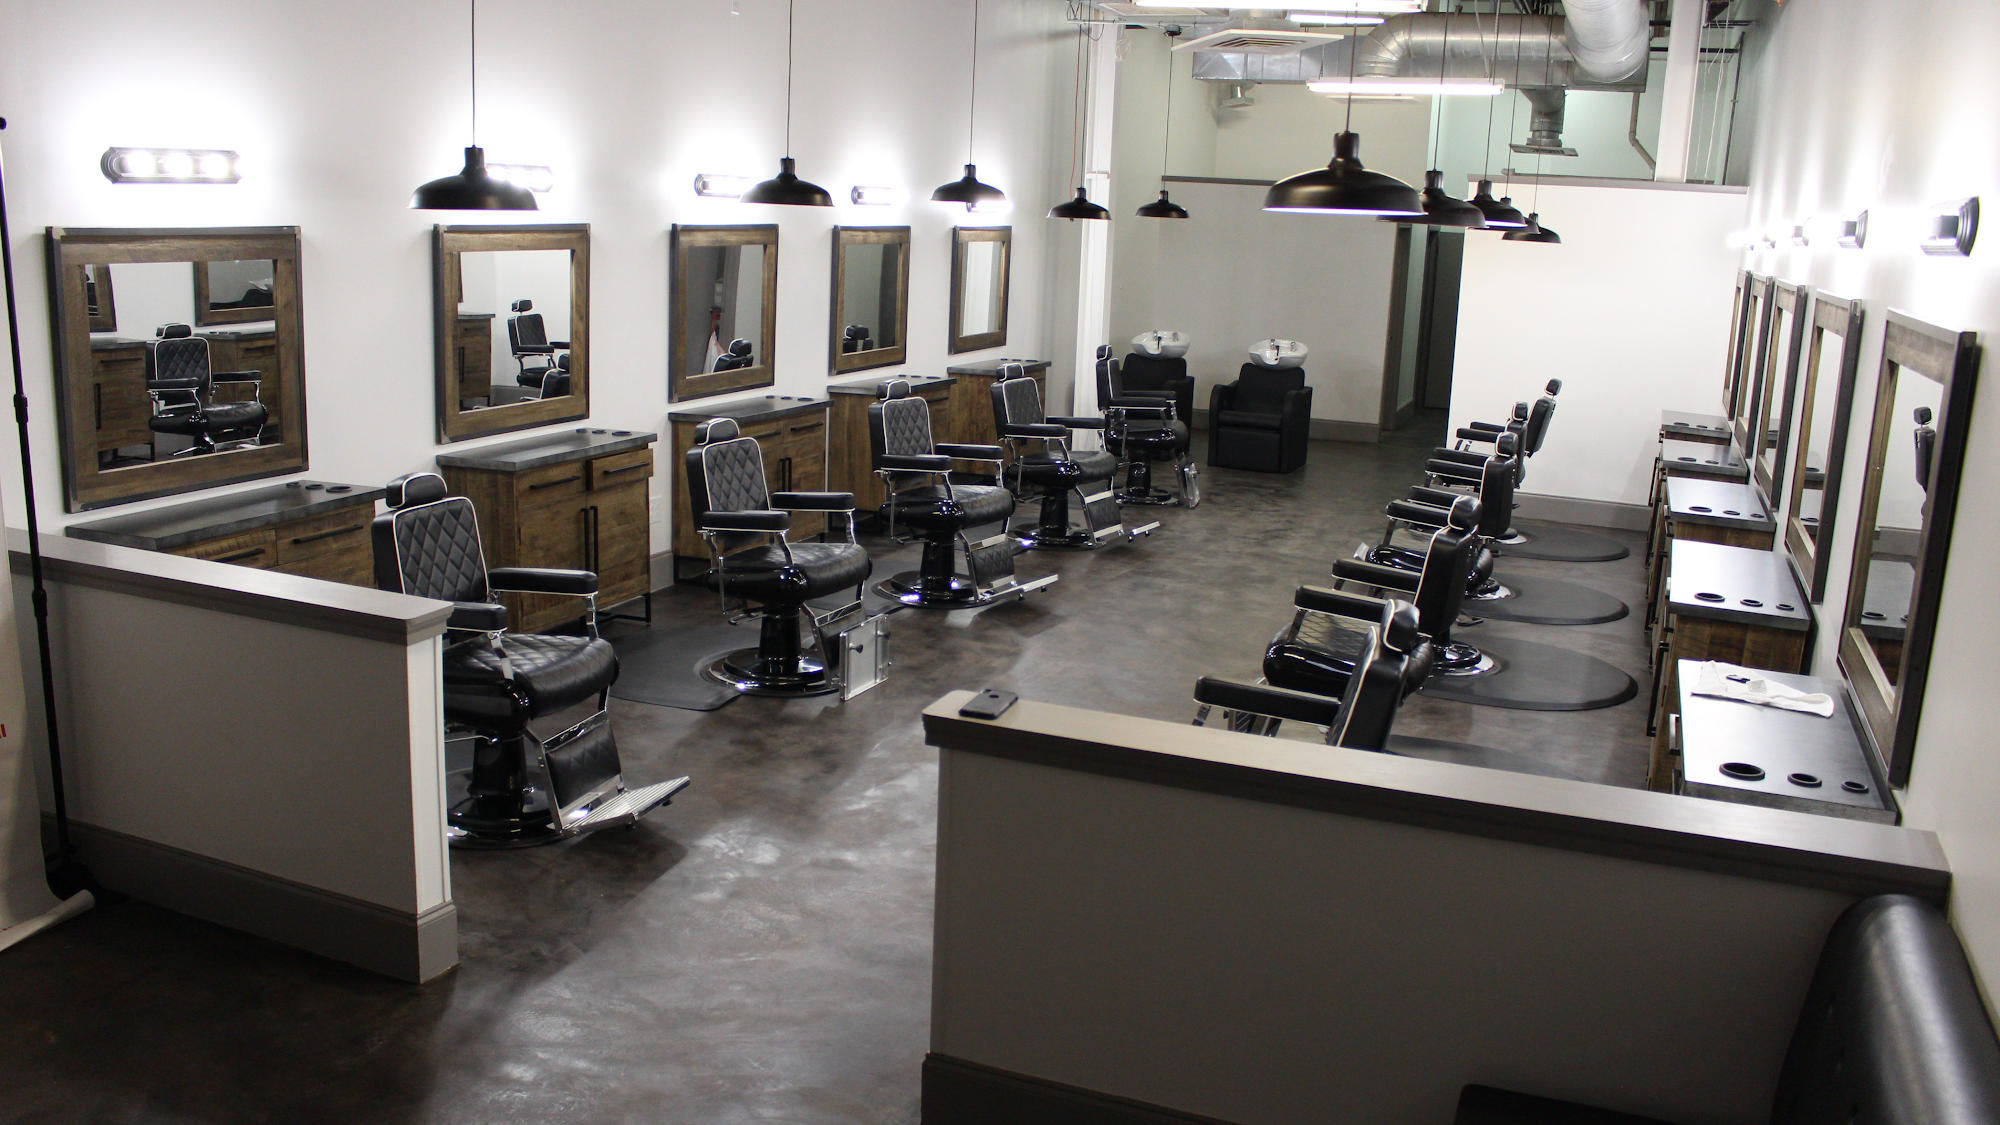 ProFRESHional Cuts Barber Shops